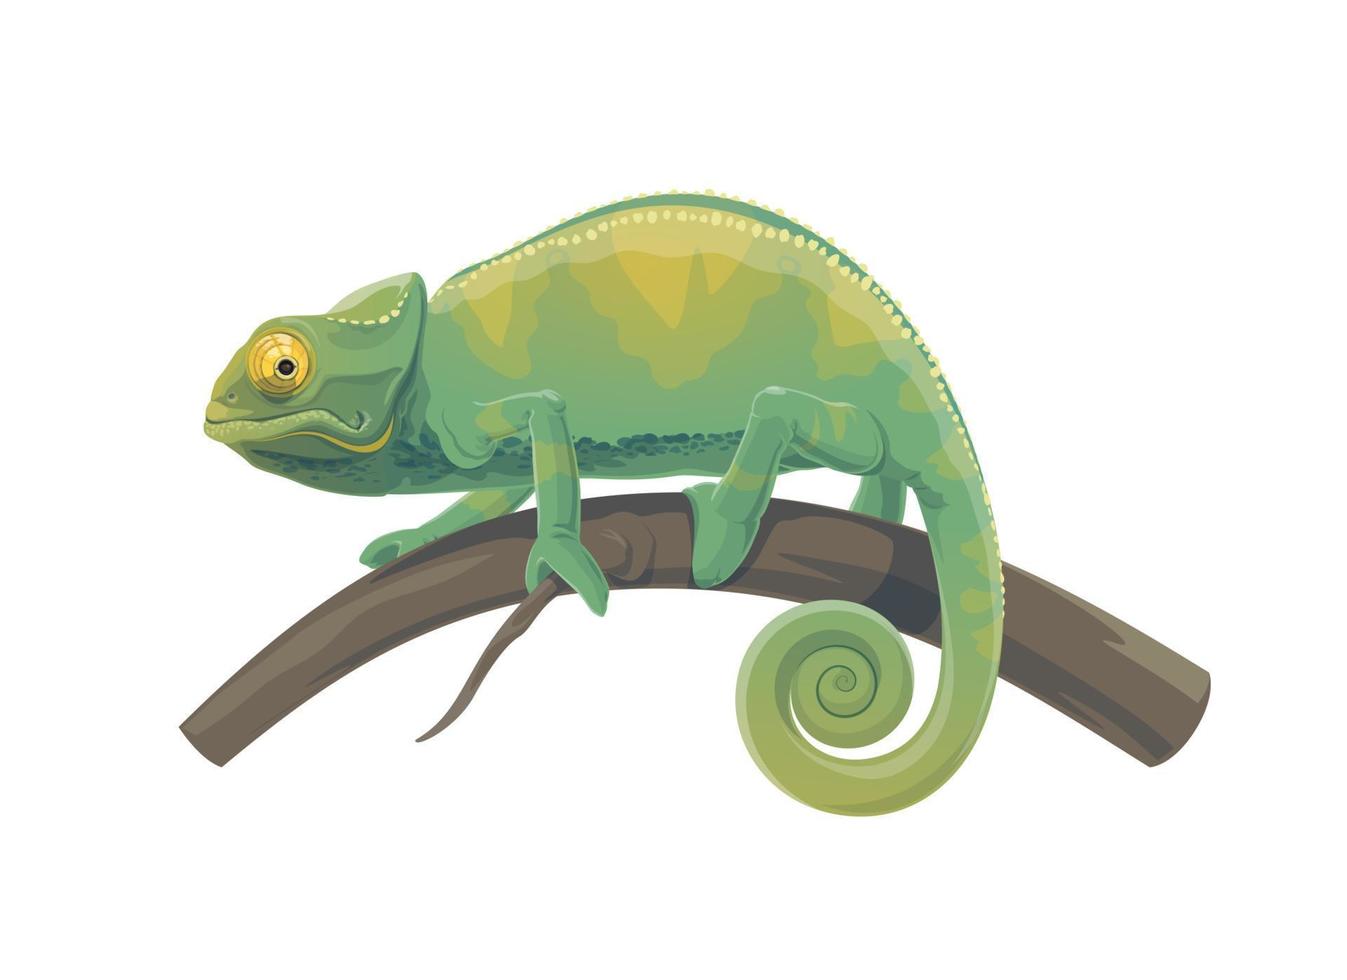 Chameleon lizard of green tropical reptile animal vector